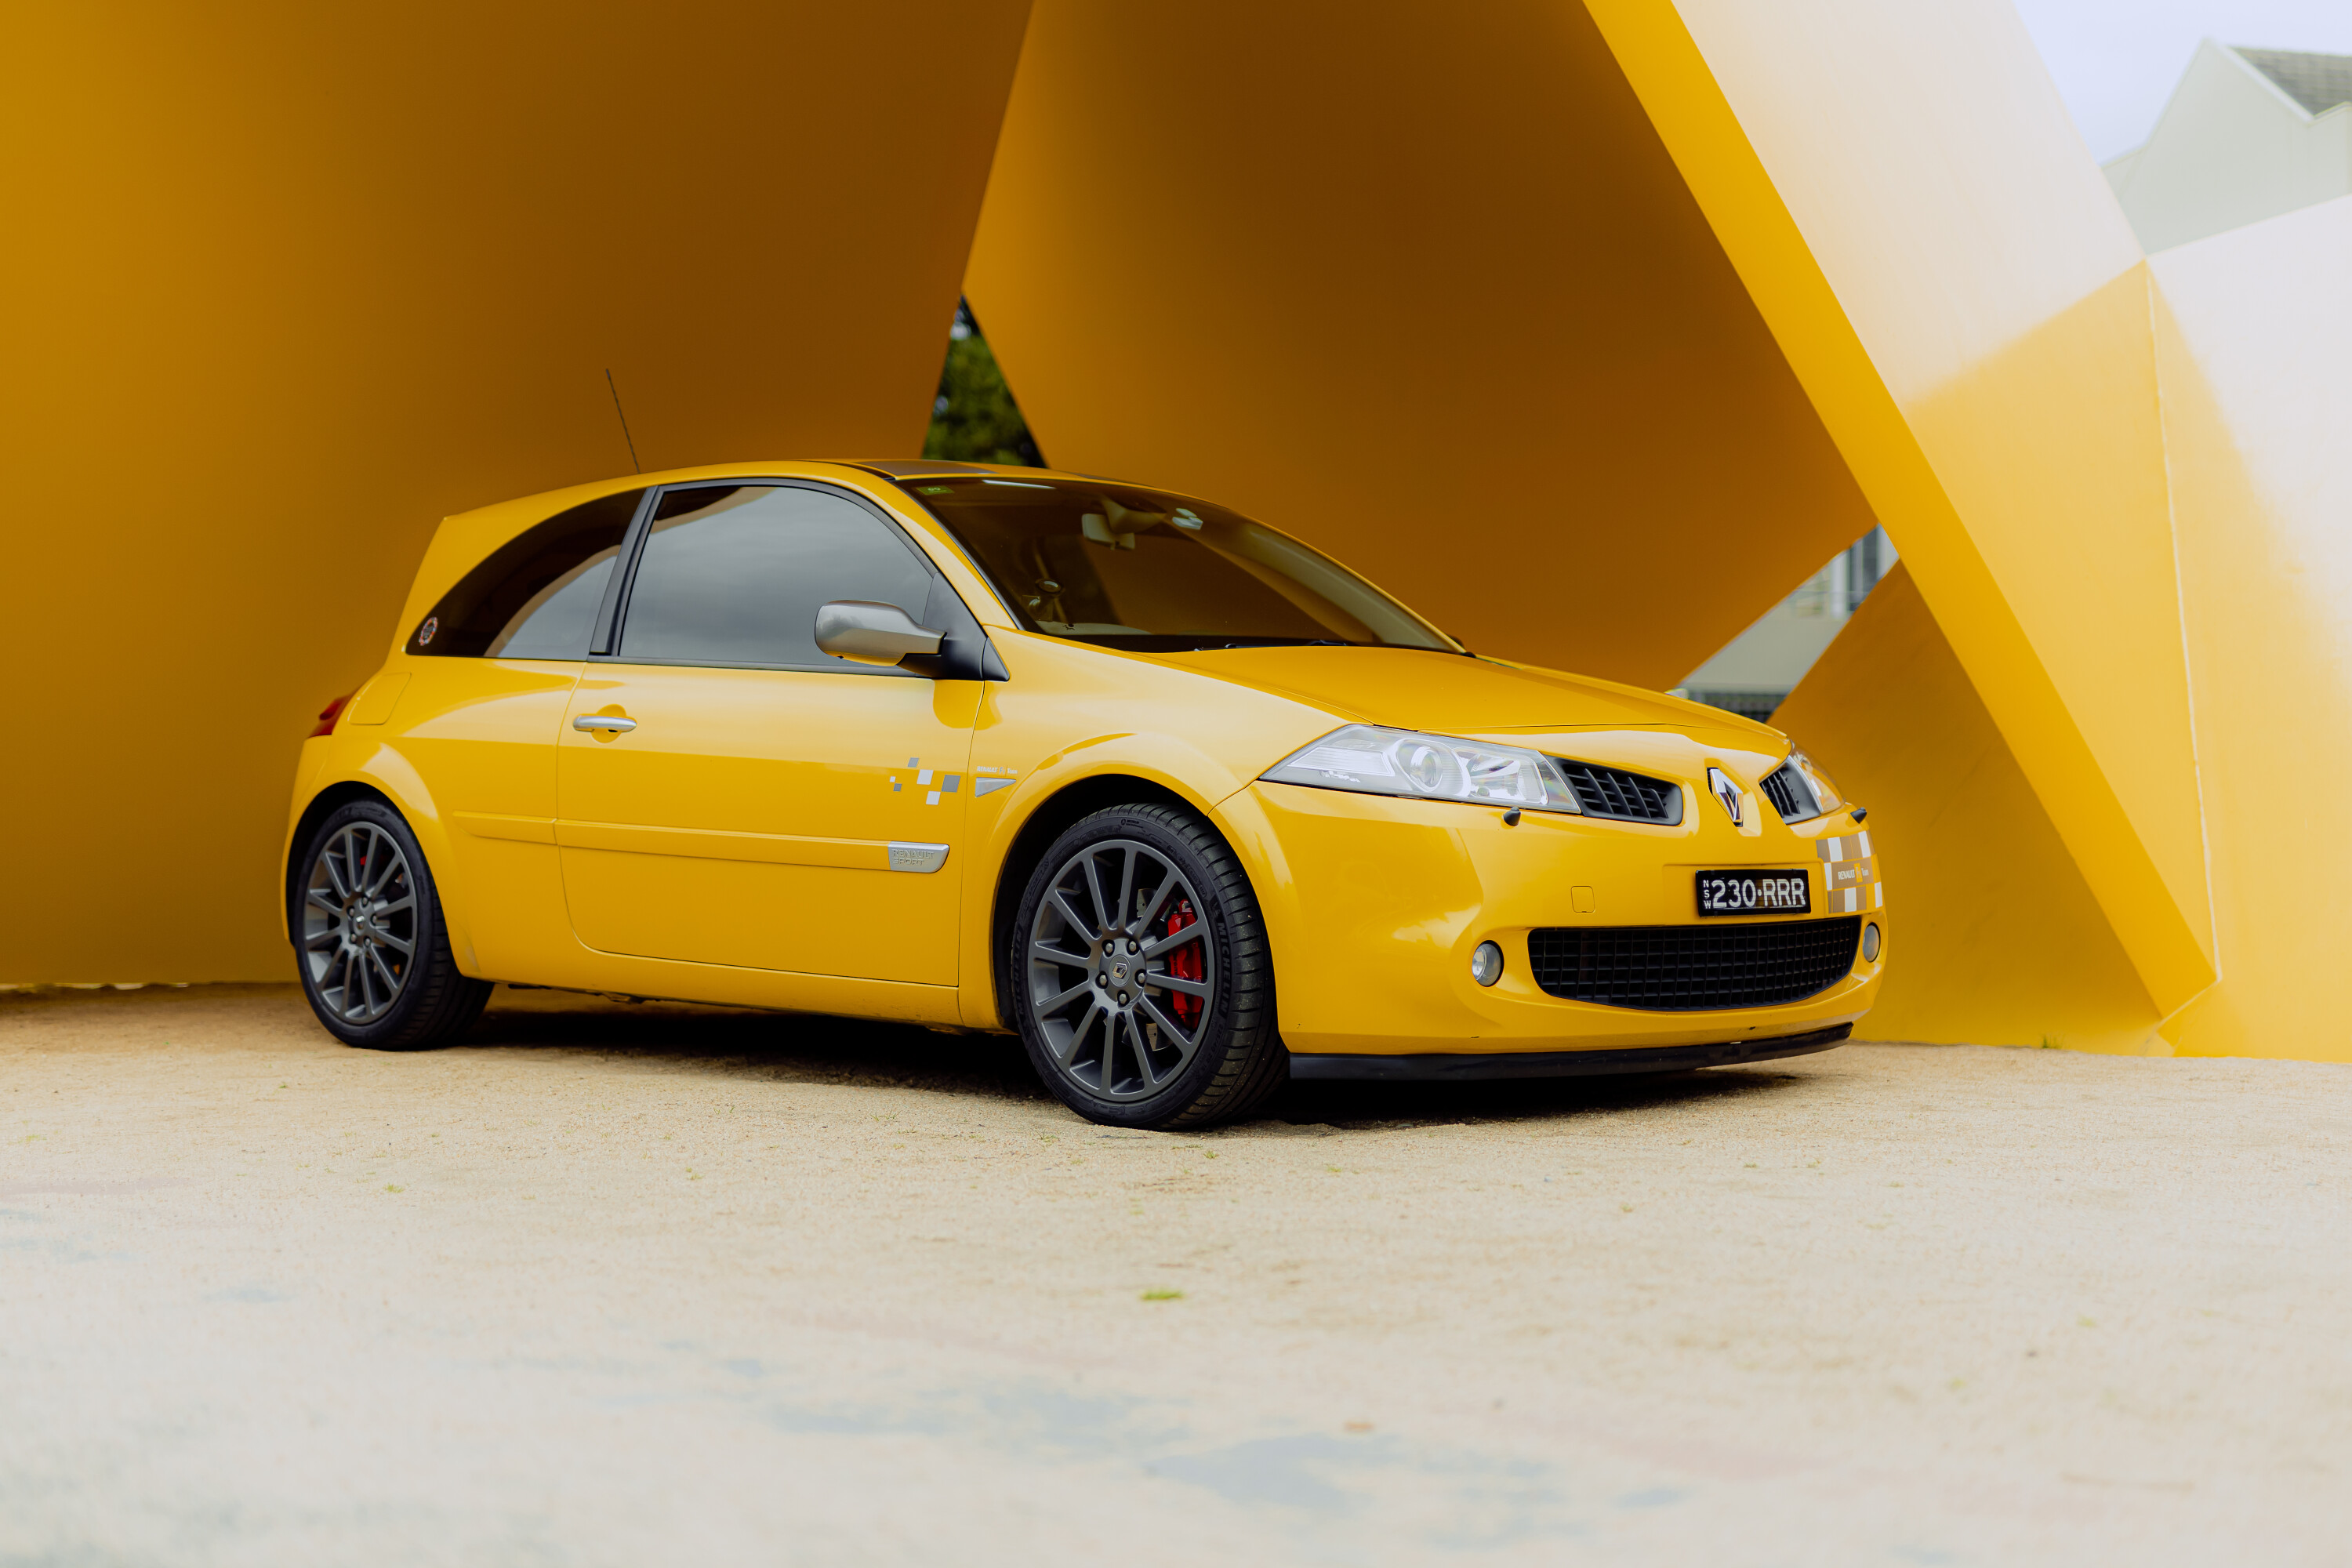 Renault Megane 2 - Photos, News, Reviews, Specs, Car listings